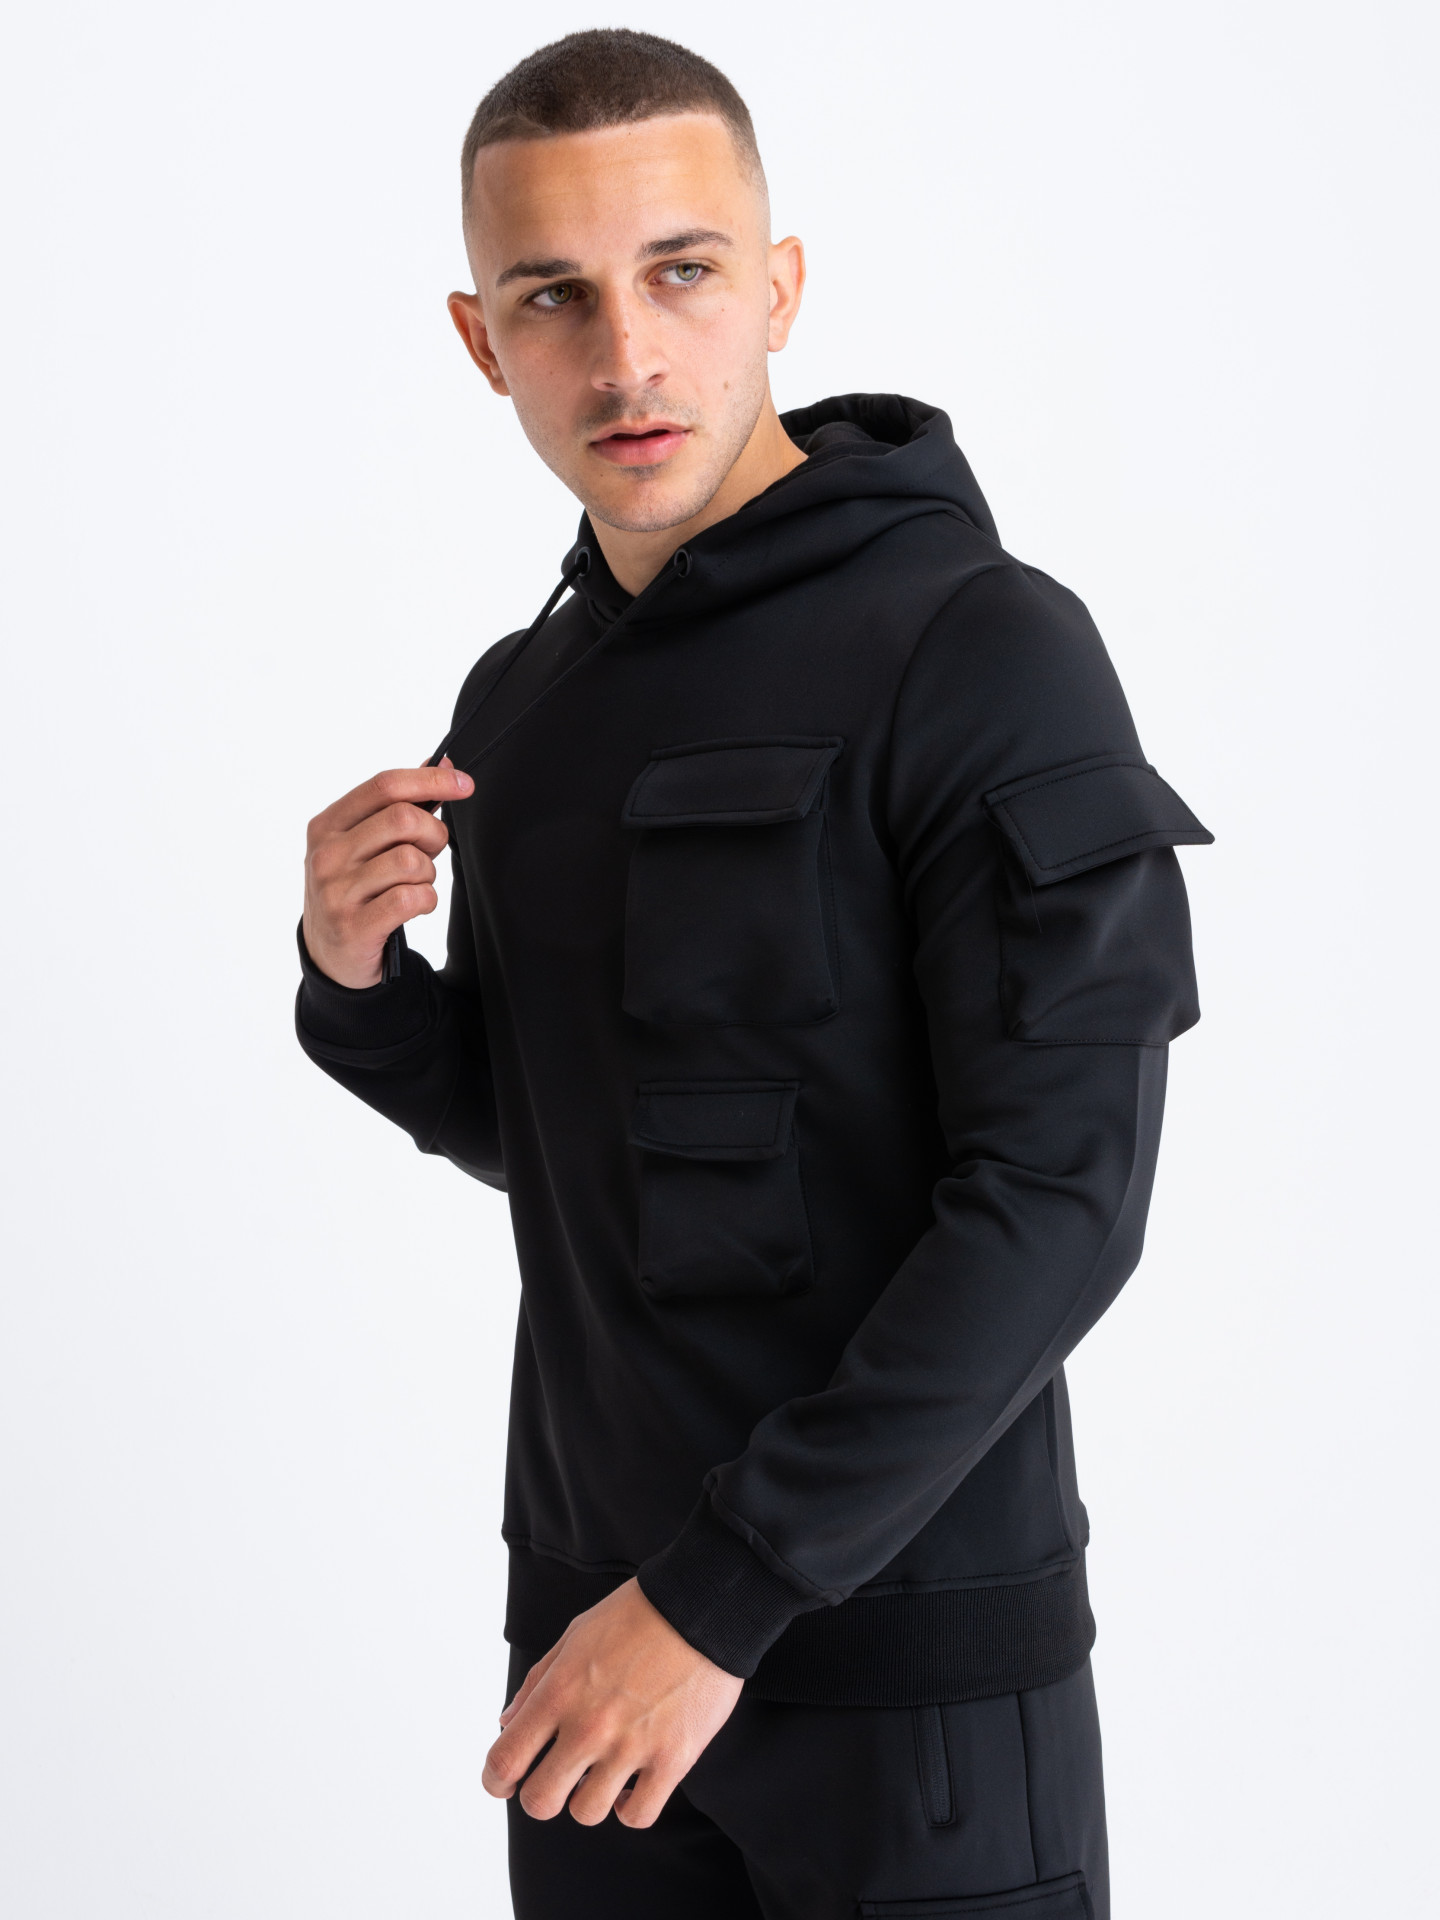 Cargo Fredo Tracksuit in Black | Men's Clothing & Fashion | HisColumn